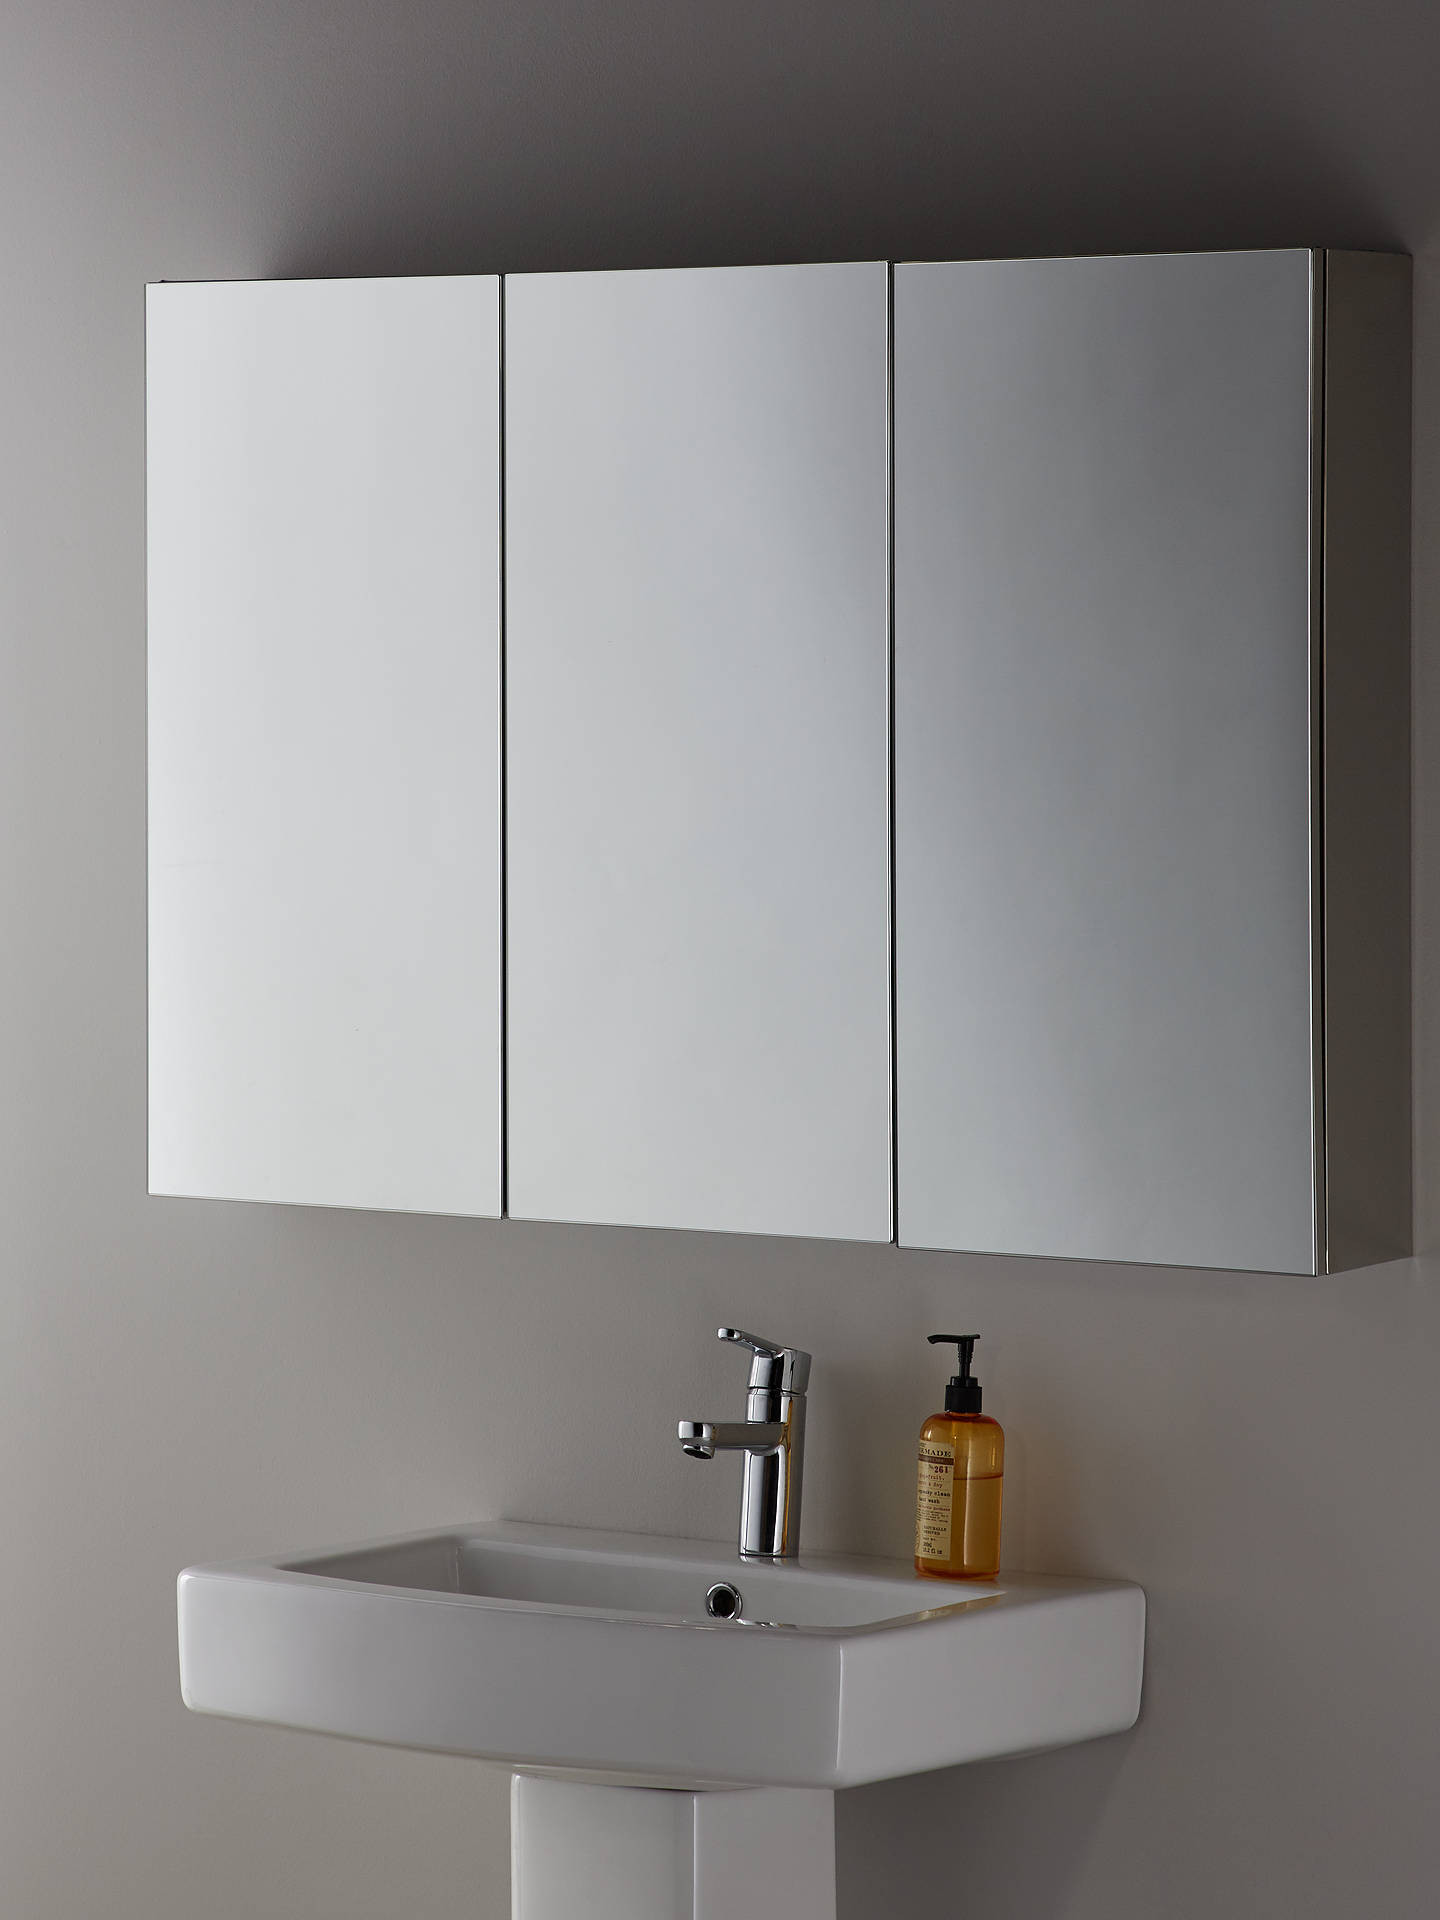 Bathroom Mirror Cabinet With Light
 John Lewis & Partners Triple Mirrored Bathroom Cabinet